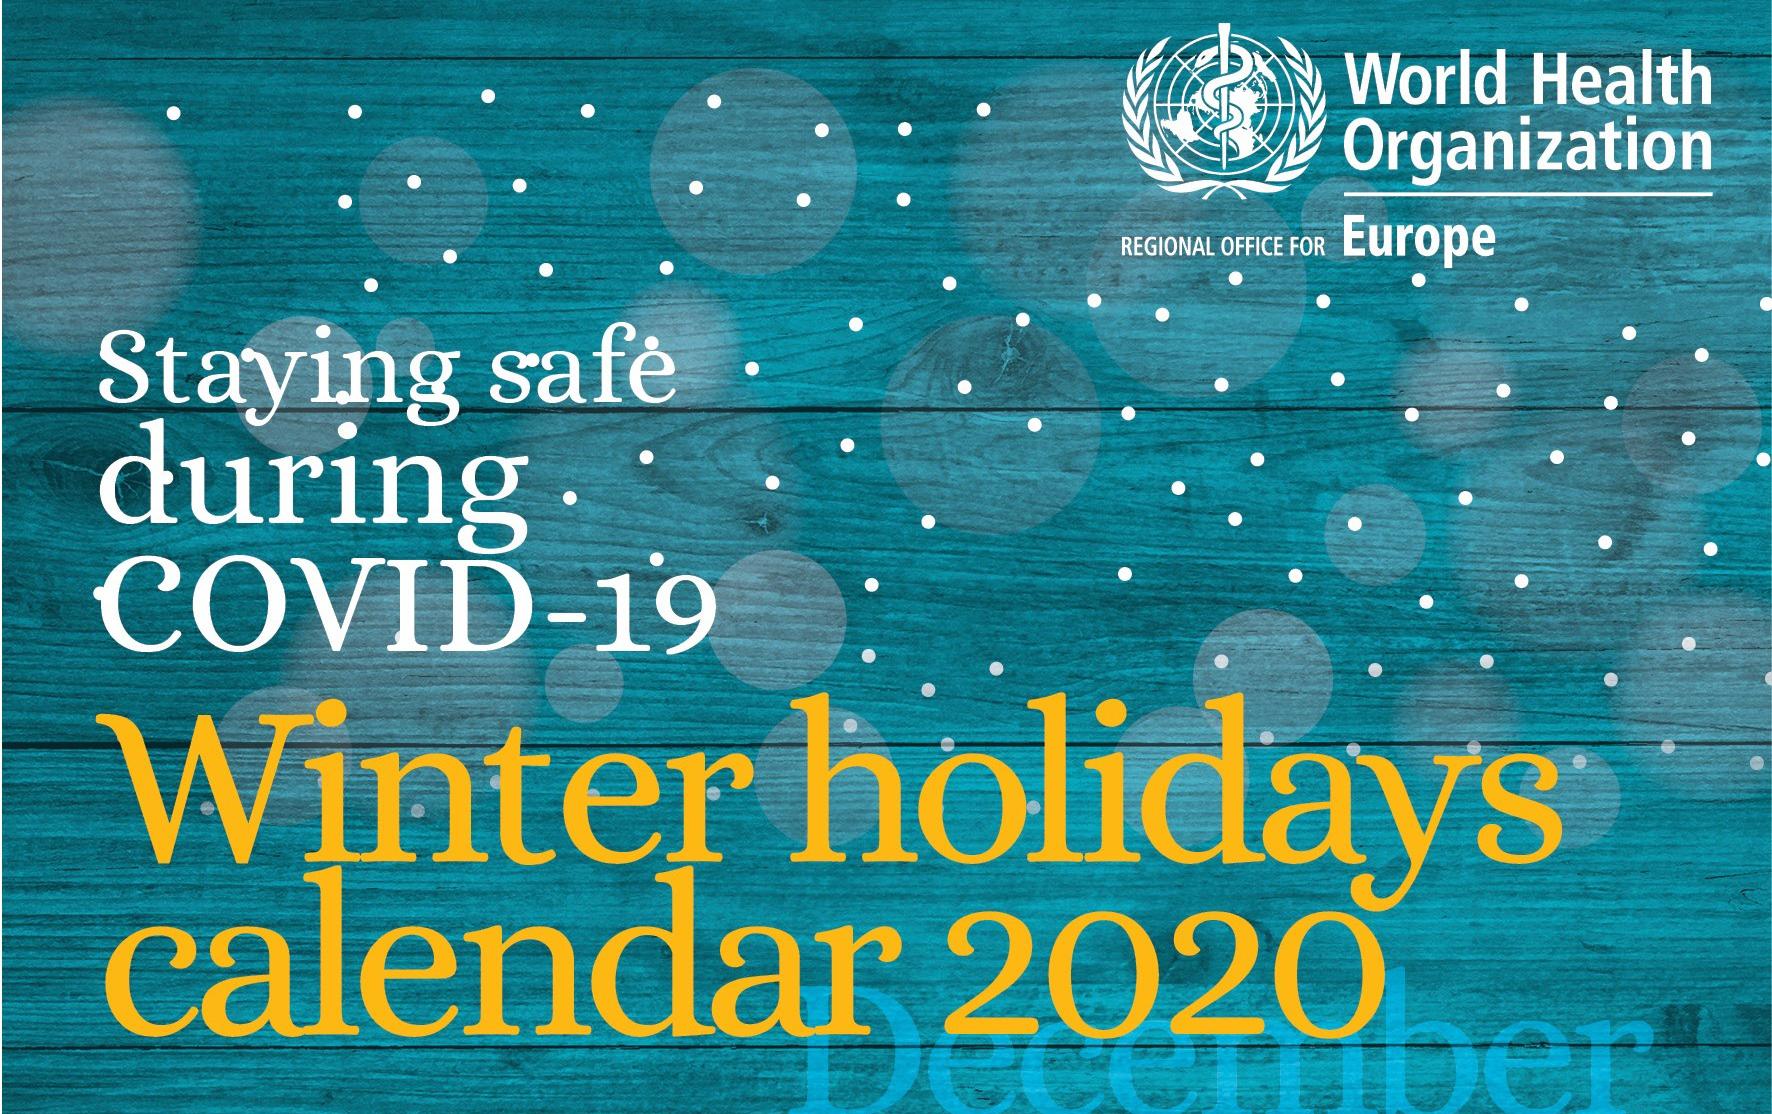 WHO Winter Holiday Calendar 2020